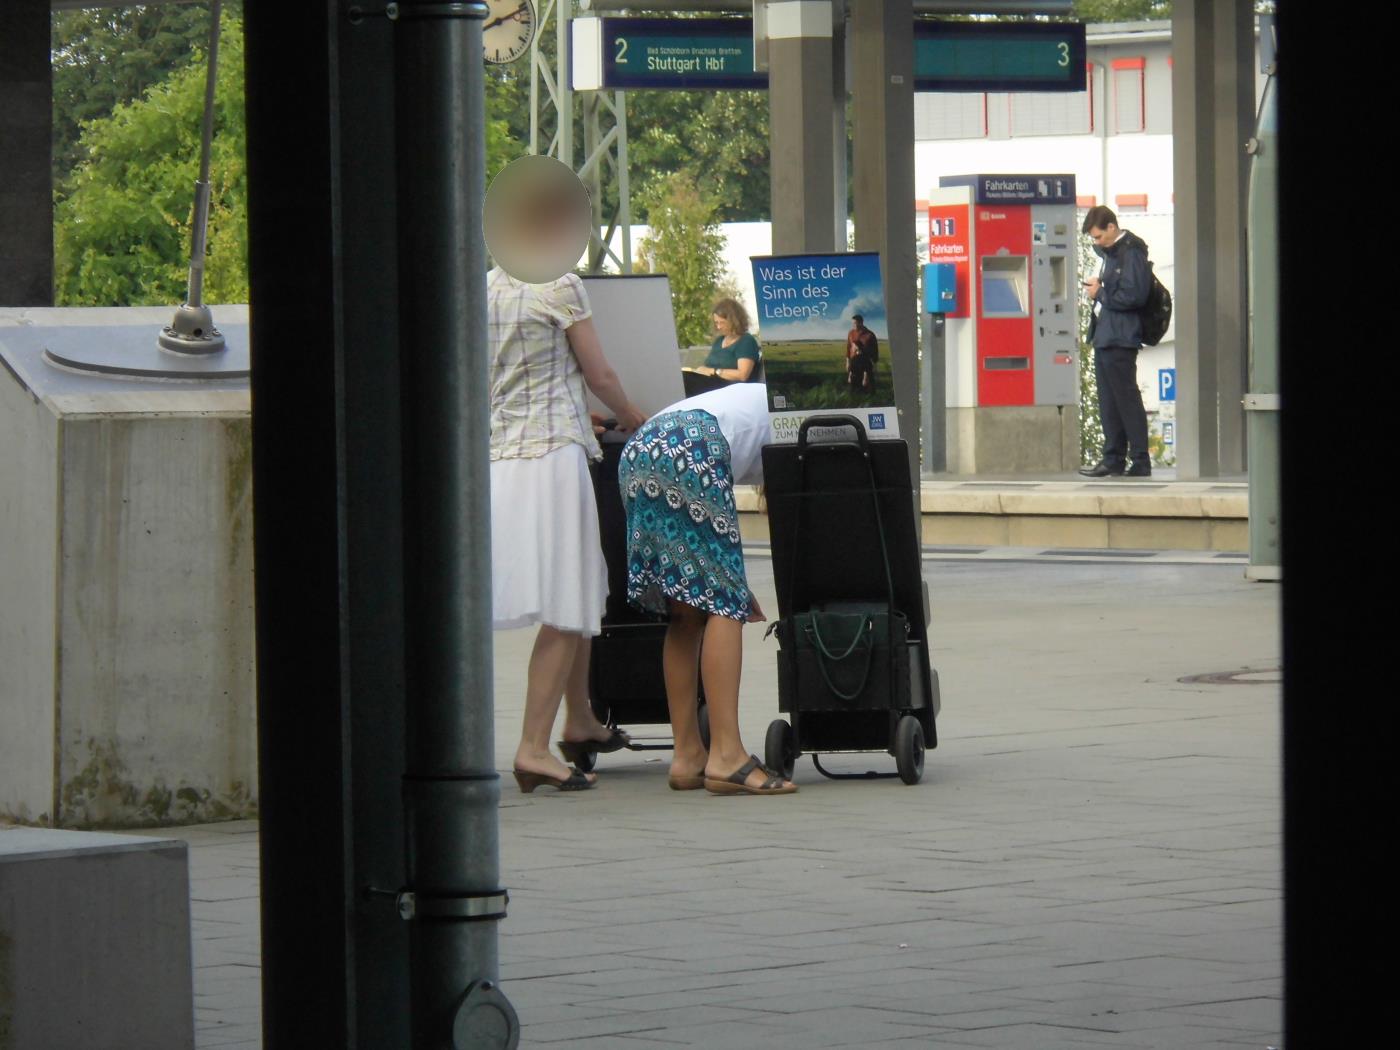 Jehovas Zeugen am Bahnhof Walldorf-Wiesloch